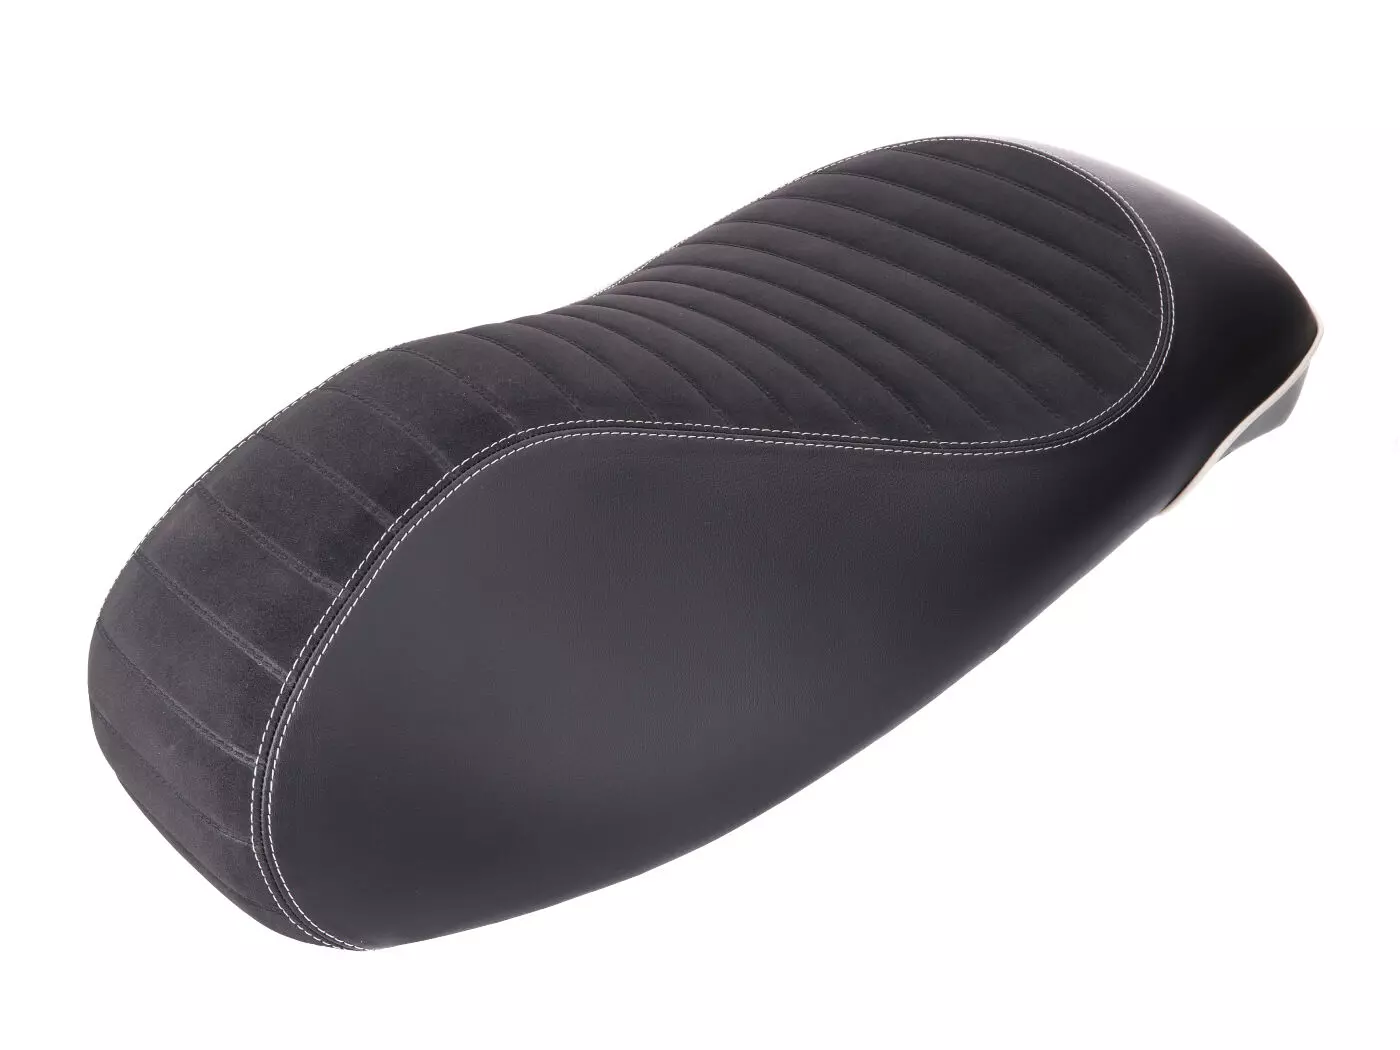 Sports Seat OEM Black For Vespa GTS 125, 300 2014